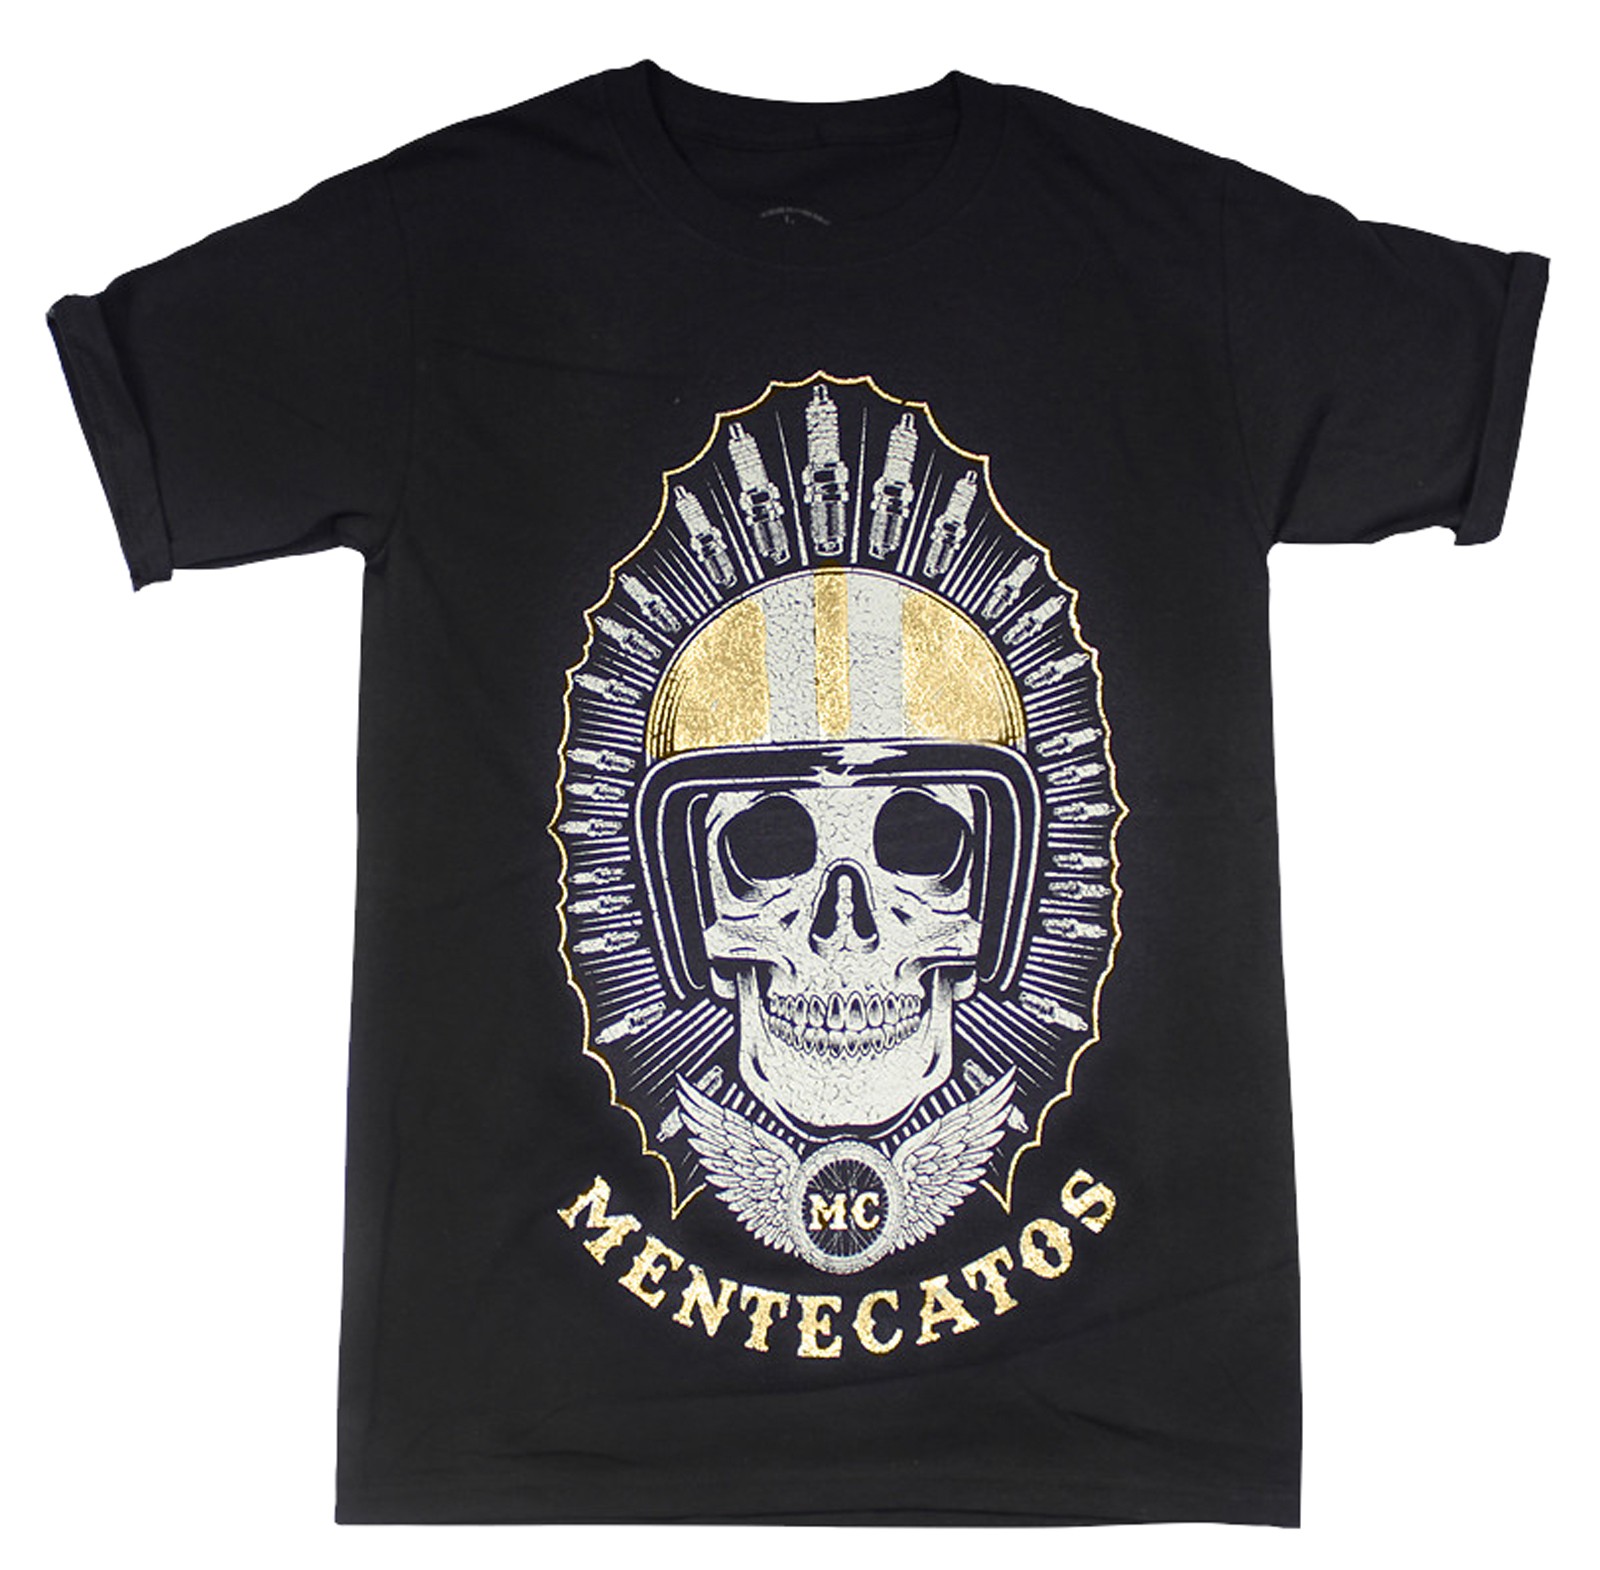 La Marca Del Diablo - Mentecatos MC T-Shirt